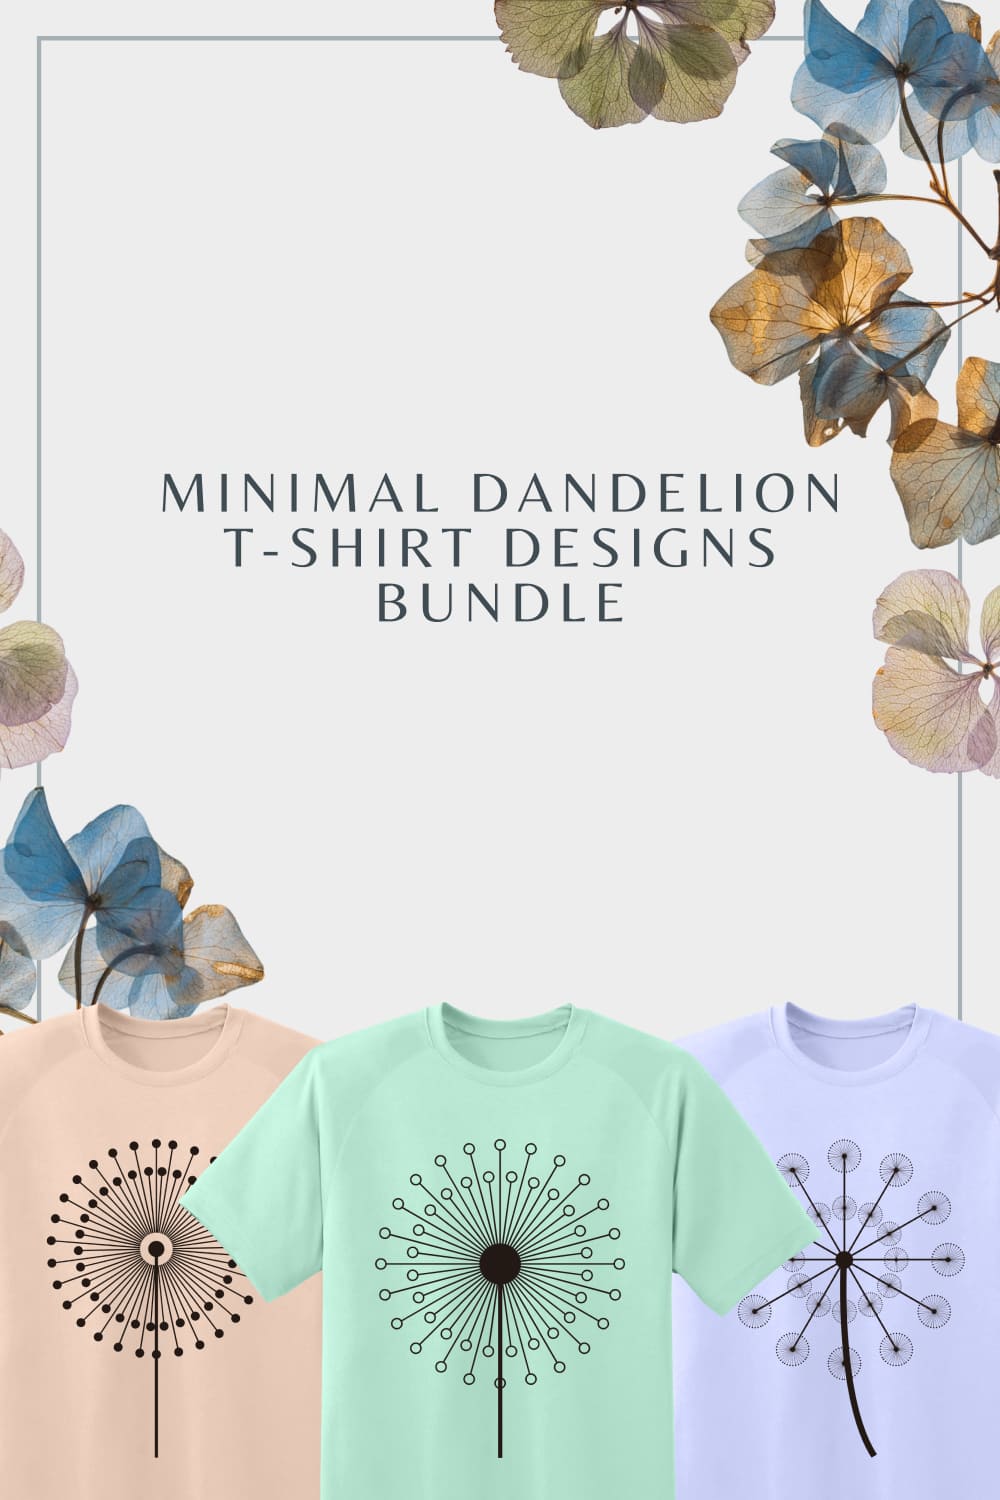 Minimal Dandelion T-shirt Designs Bundle - Pinterest.